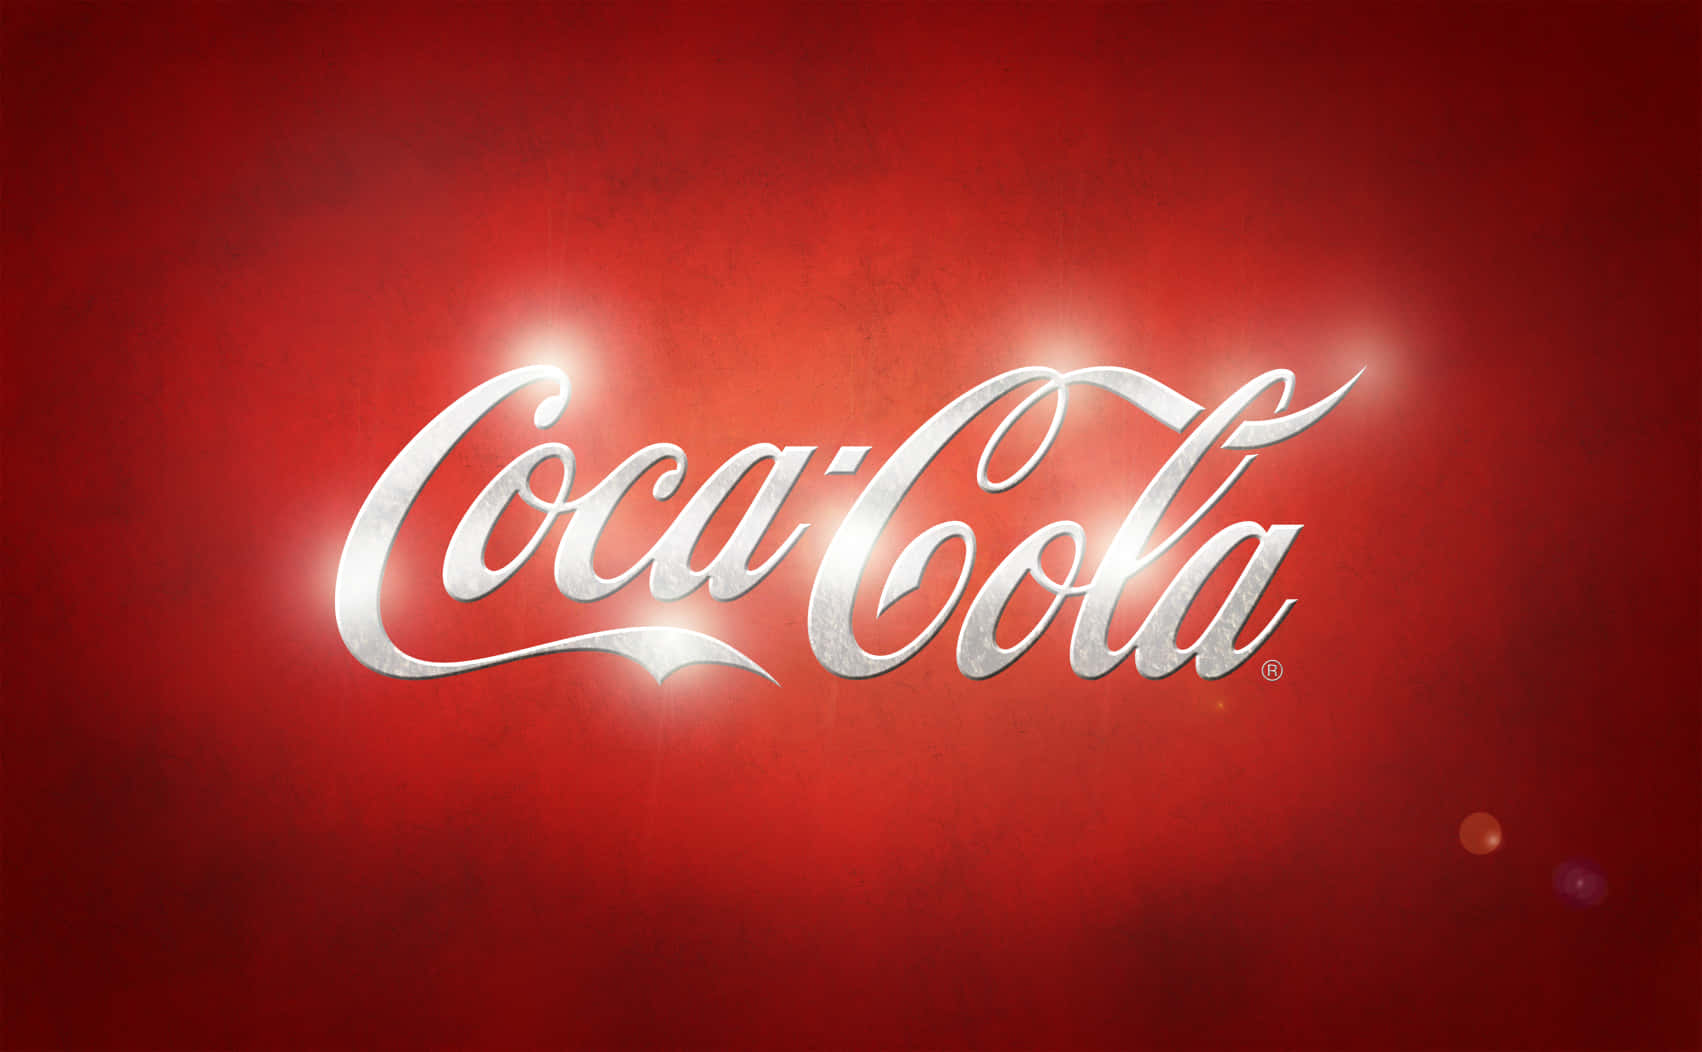 Cocacola-logotyp På En Röd Bakgrund.